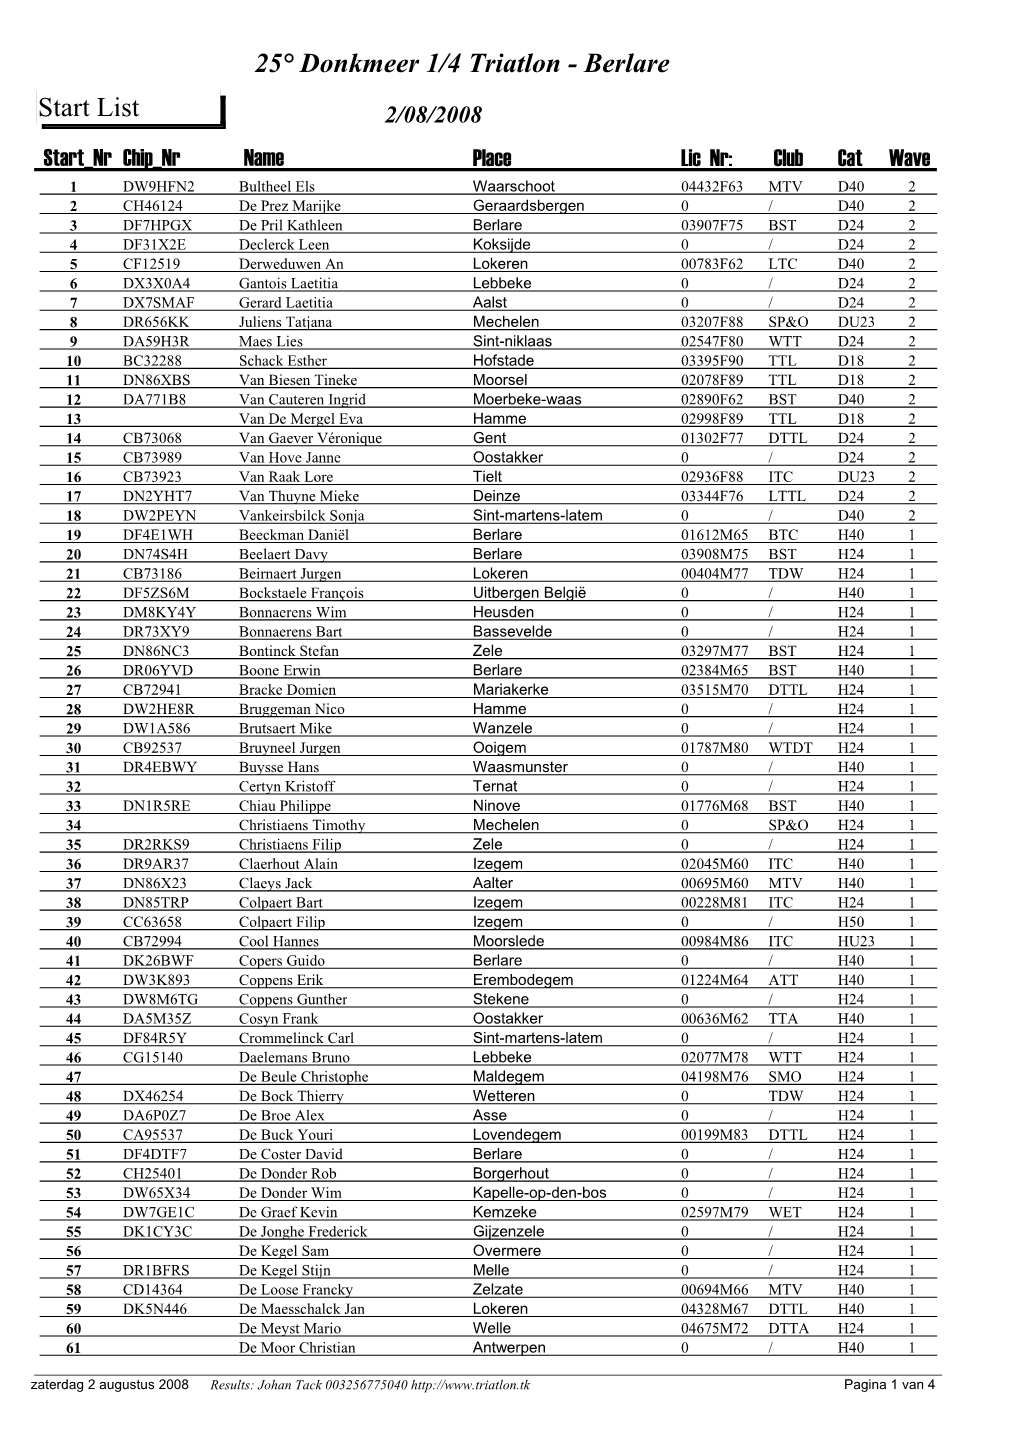 Start List 25° Donkmeer 1/4 Triatlon